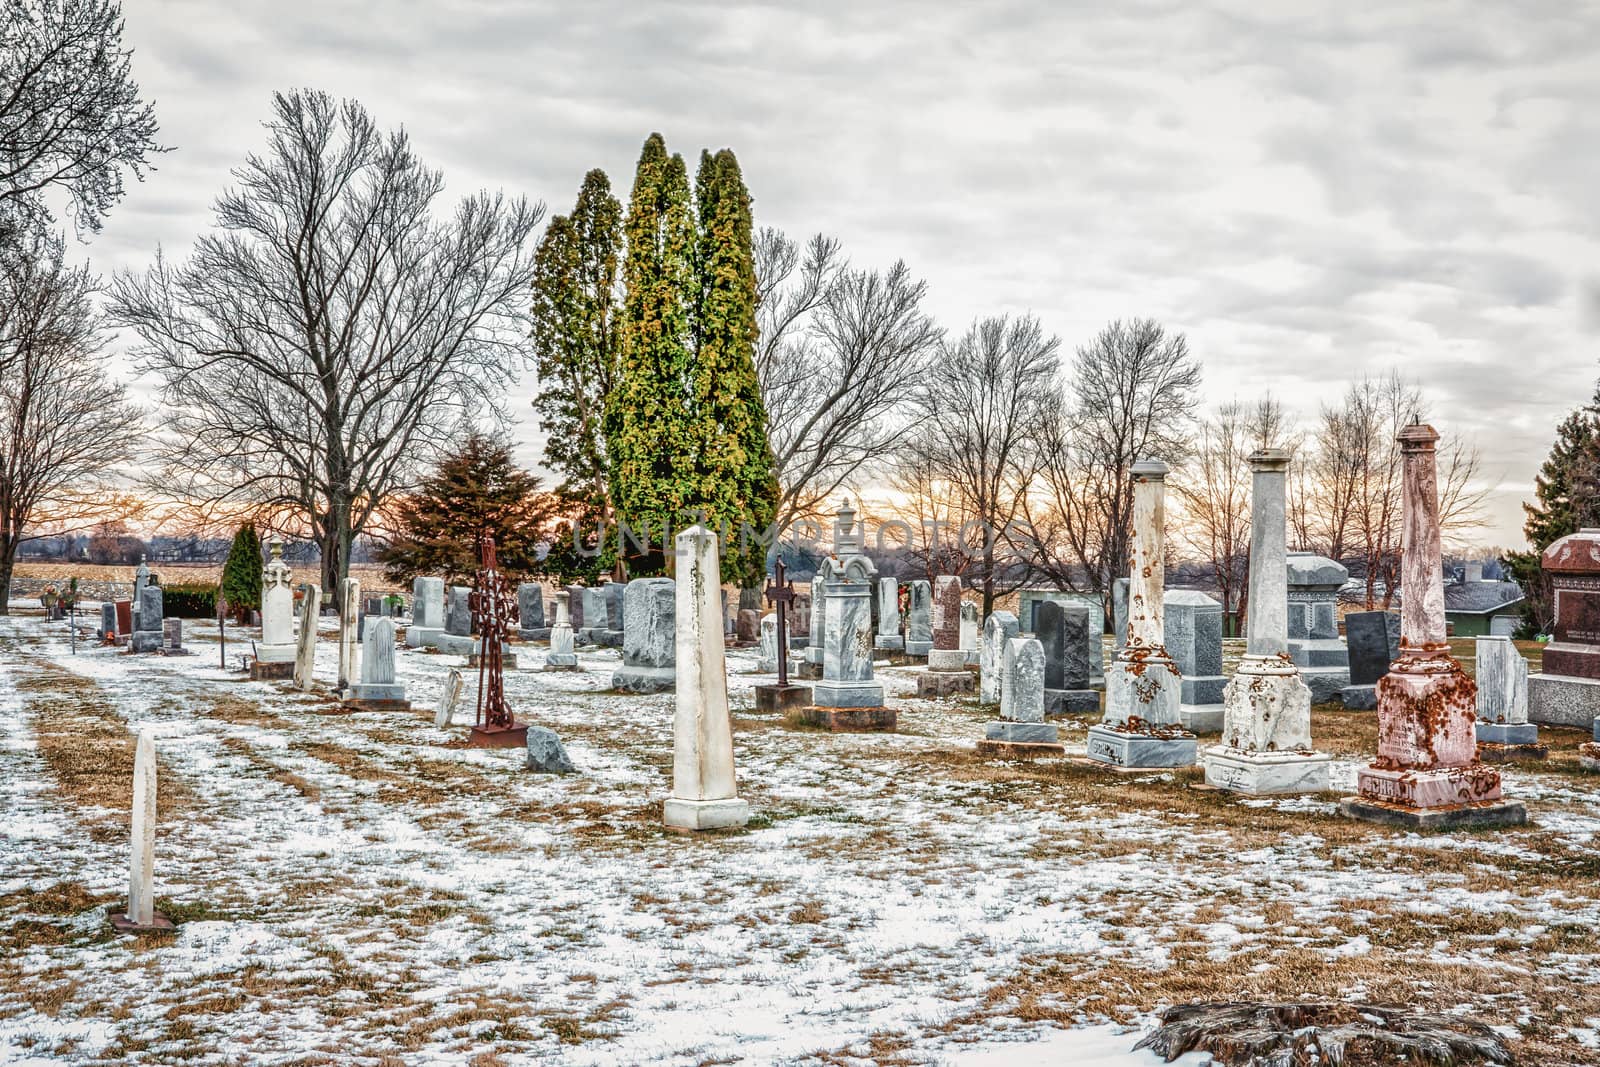 Rural American Cemetery in Winter by wolterk